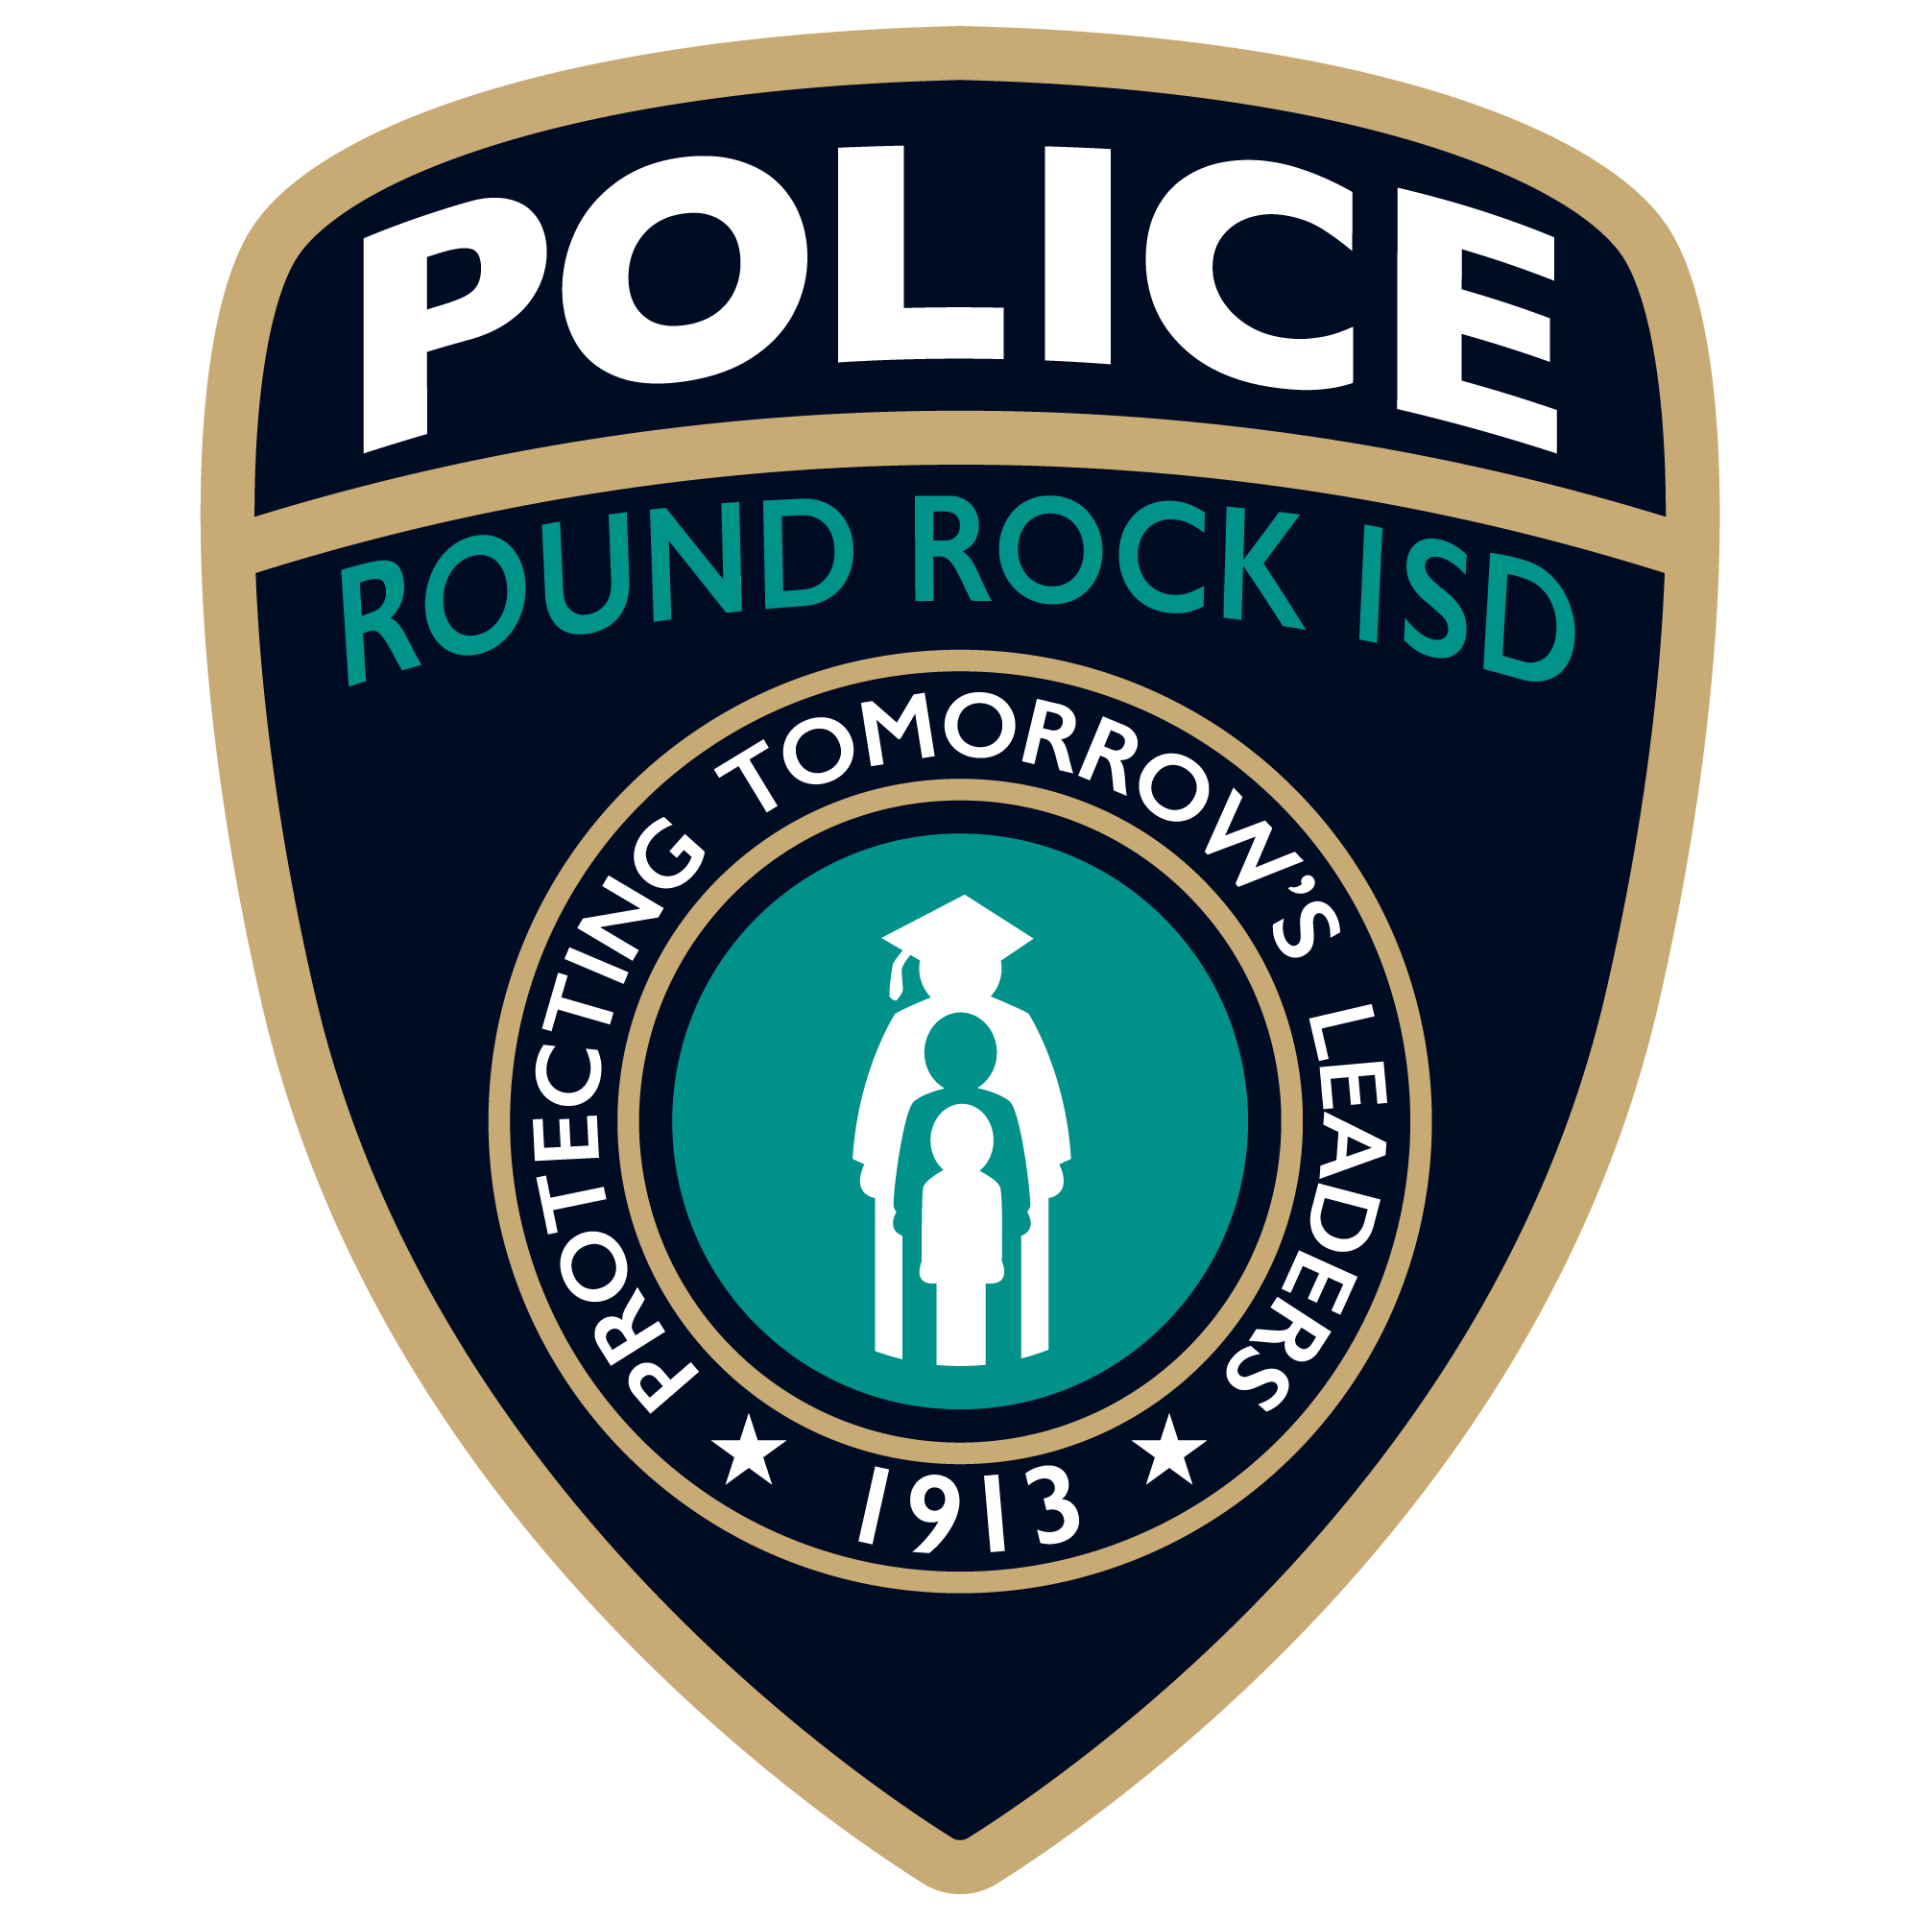 Police - Round Rock ISD - Logo